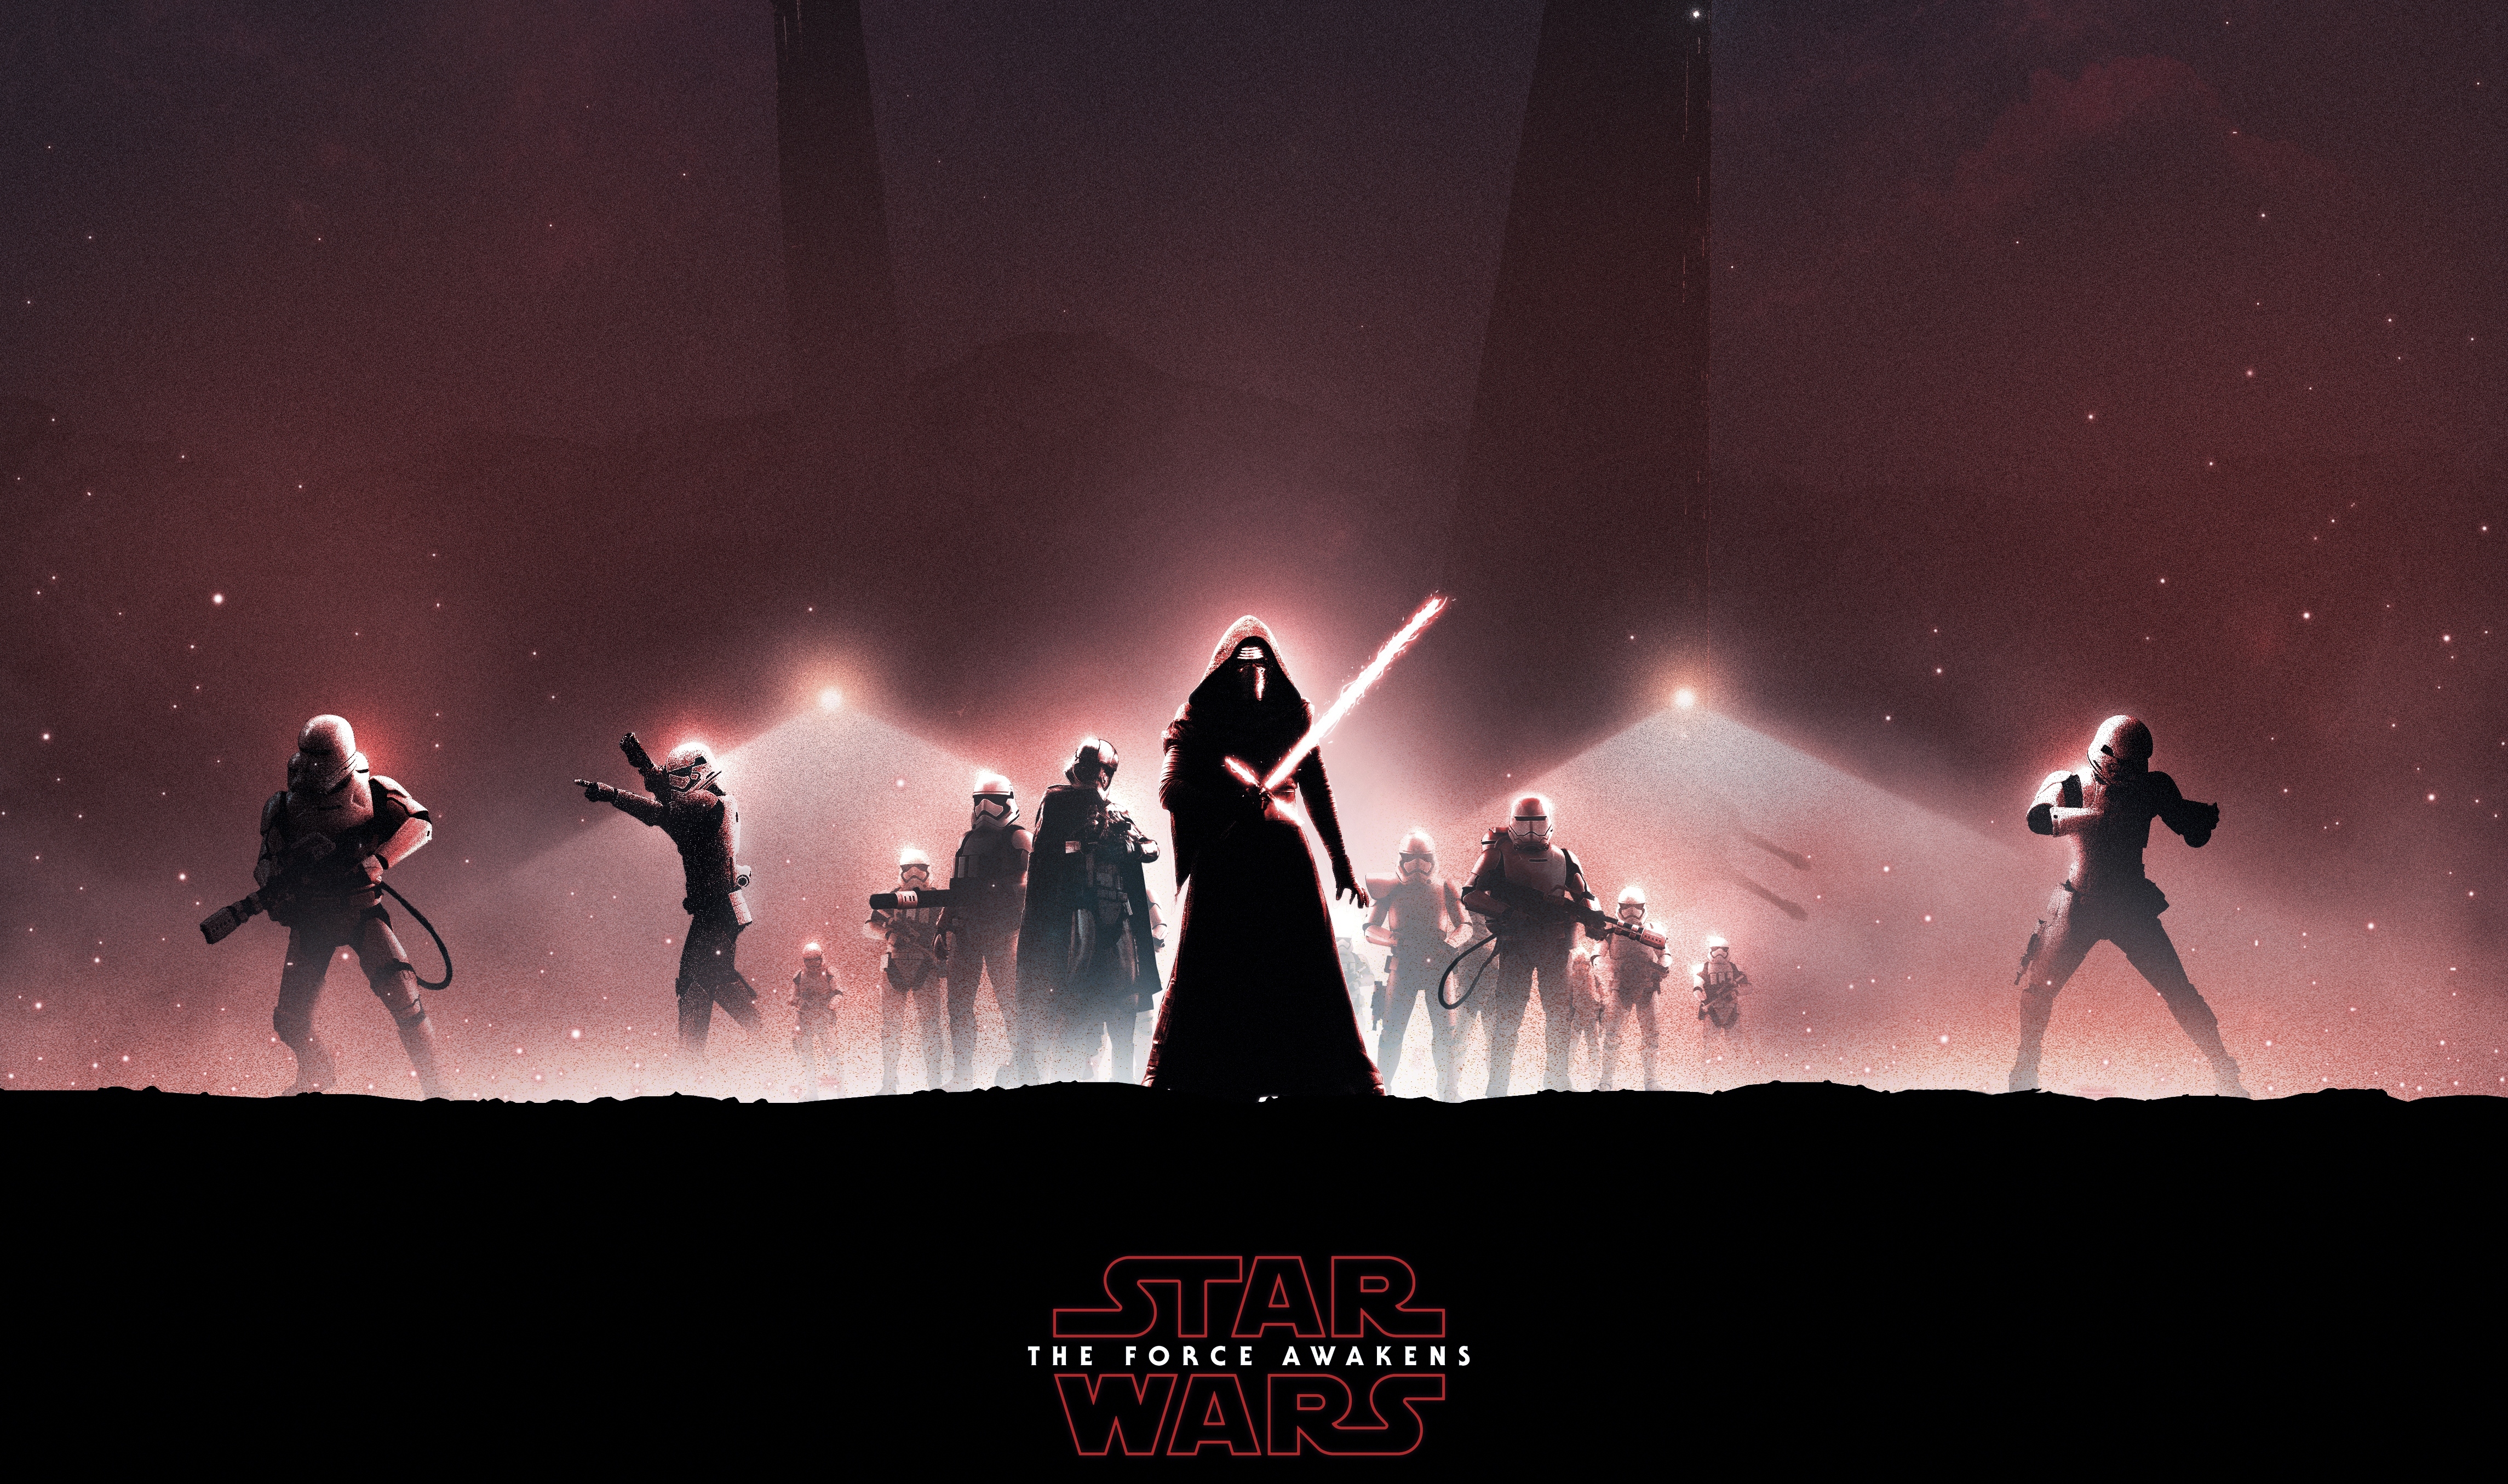 Star Wars Episode Vii The Force Awakens Backgrounds